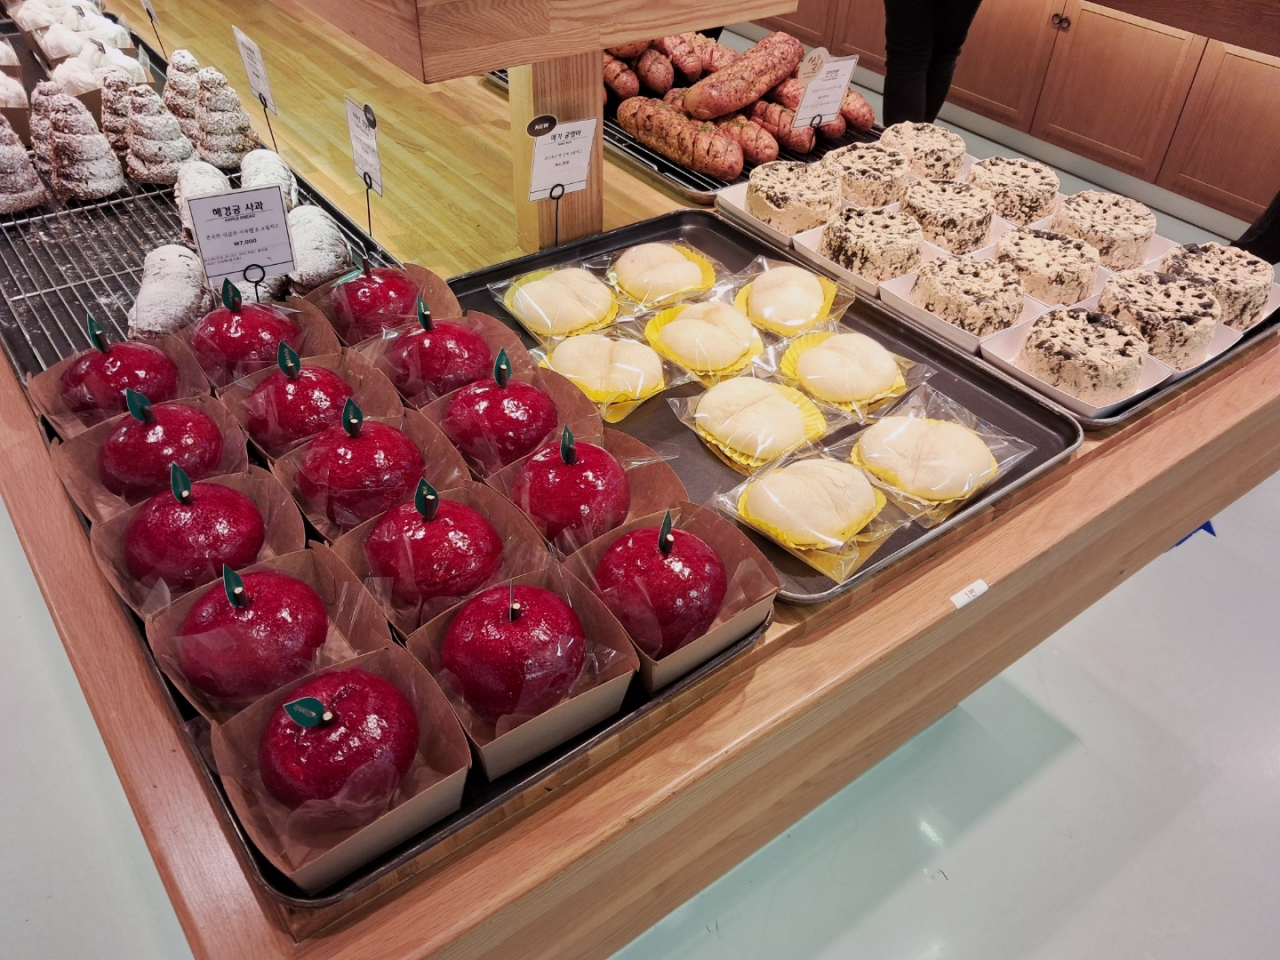 Sweet desserts are displayed at Hyegyeonggung Bakery. (Lee Si-jin/The Korea Herald)